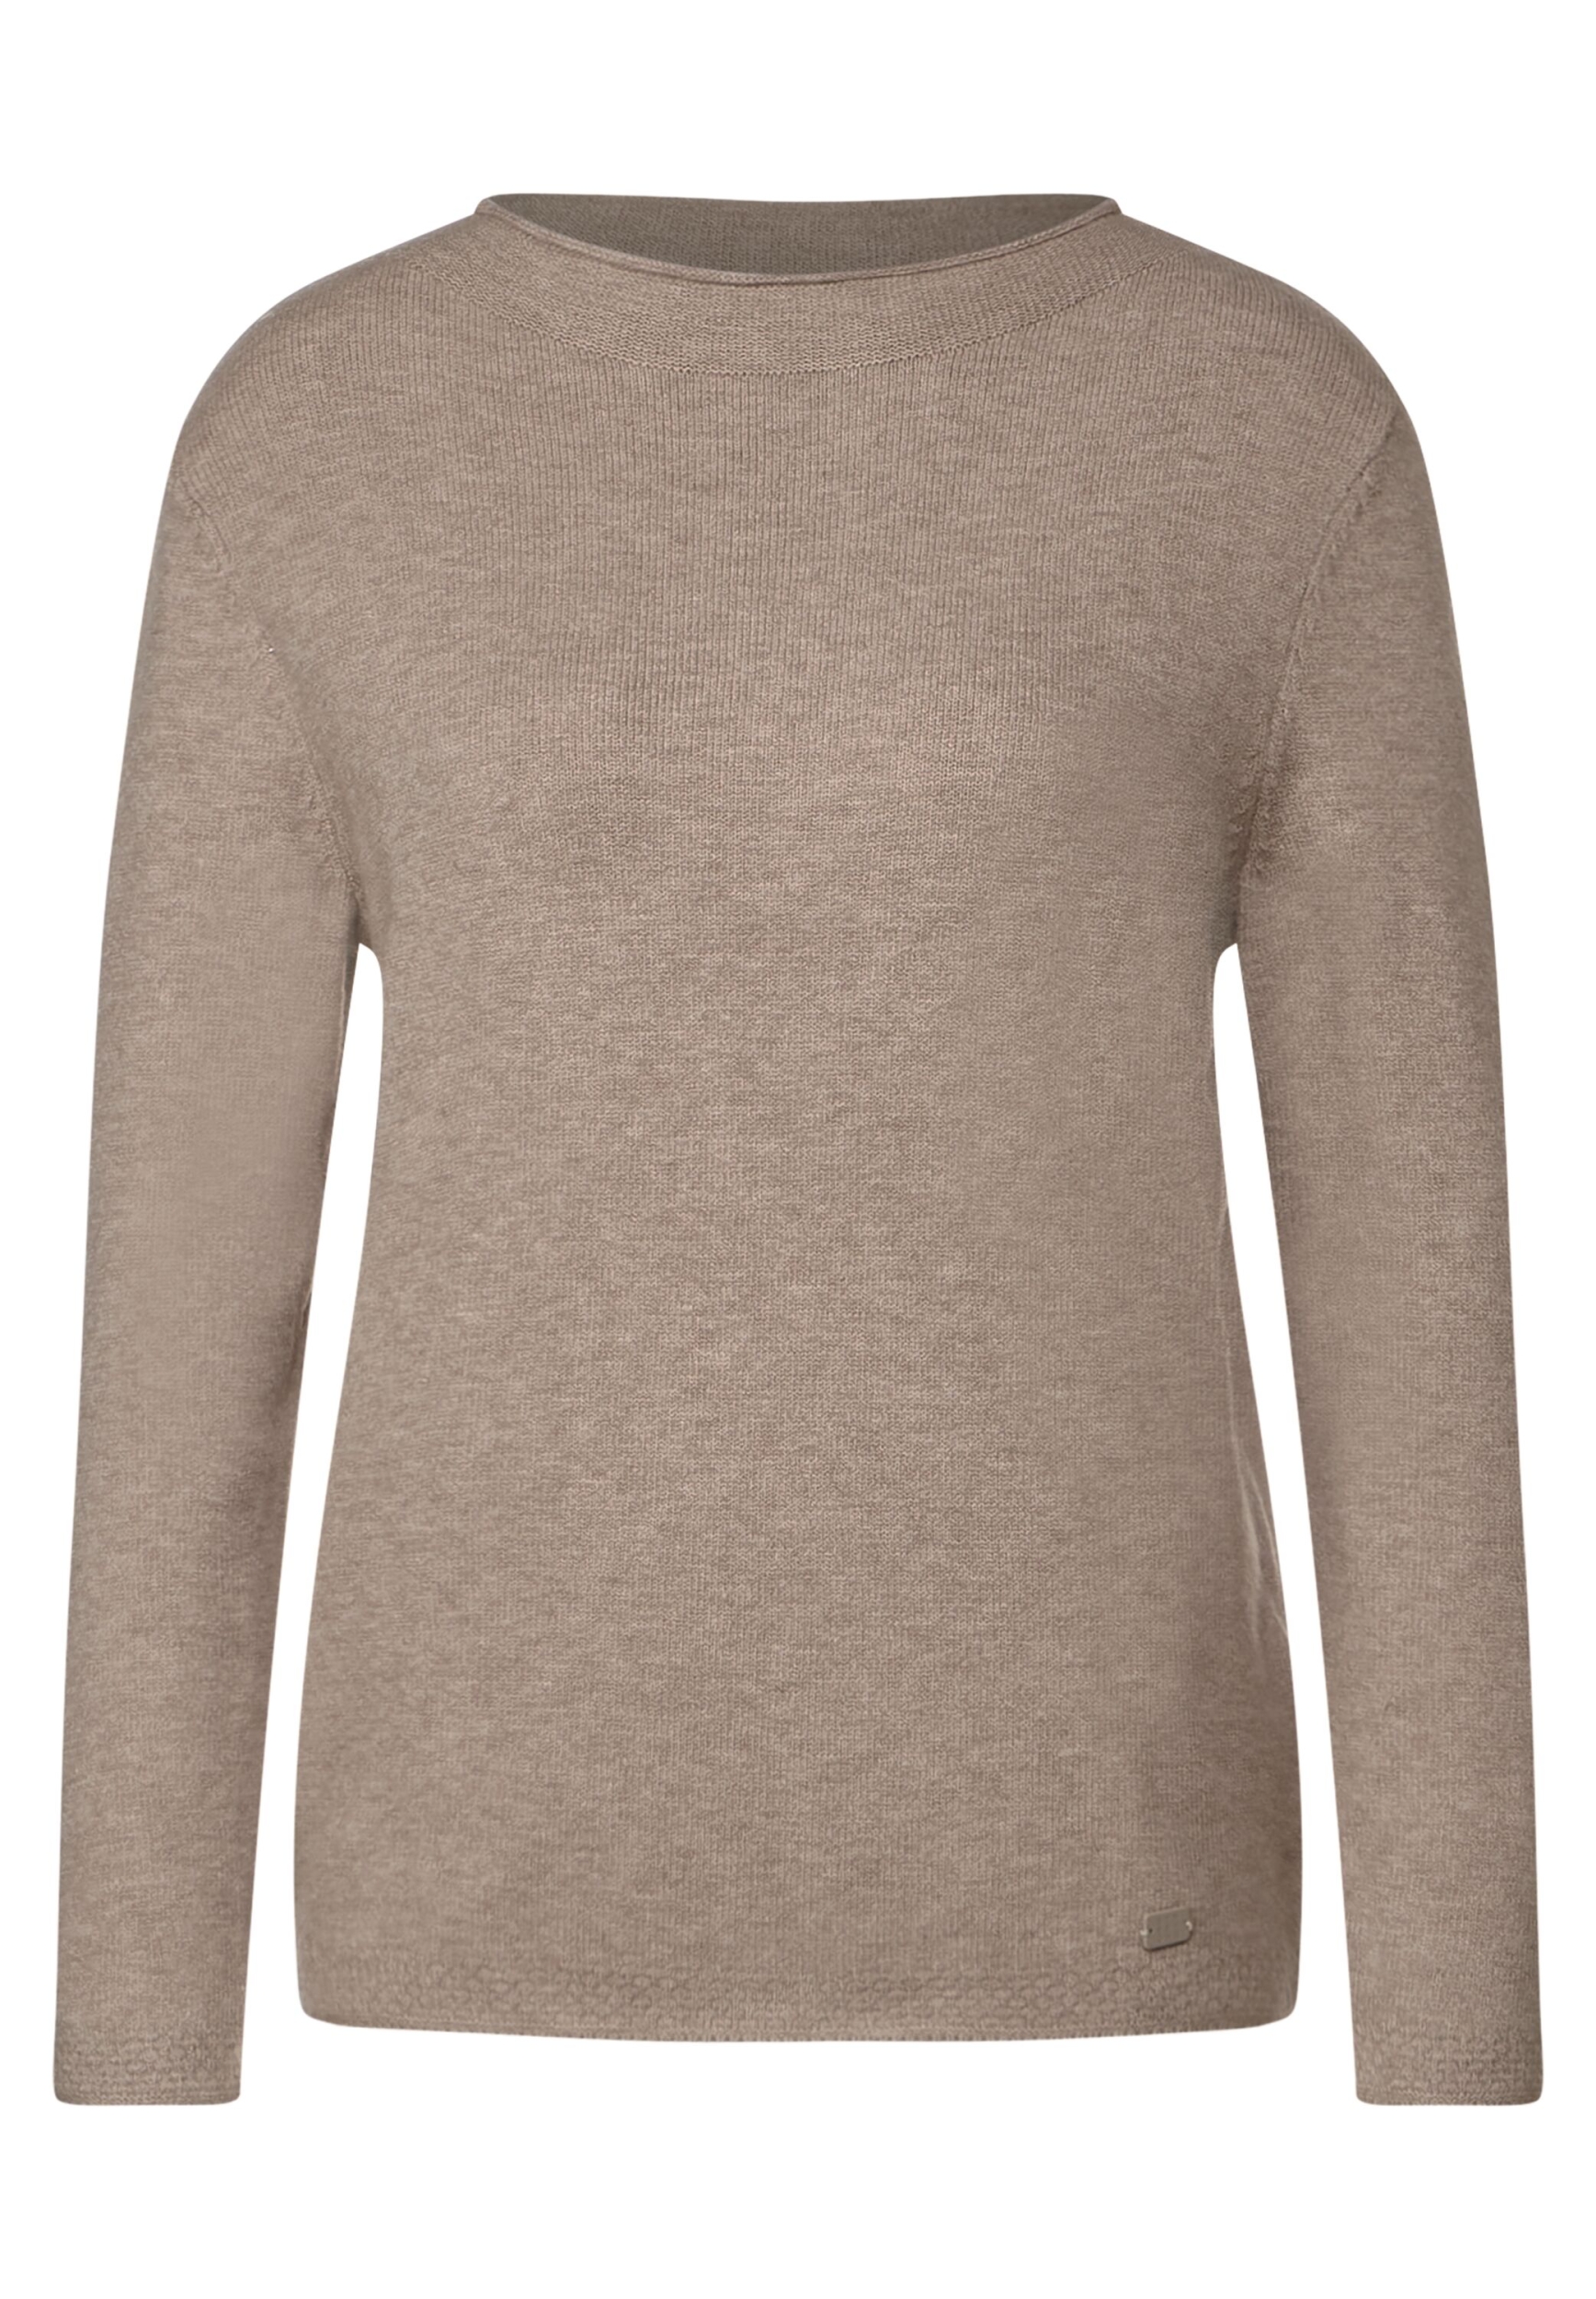 Bestseller-Online-Verkauf LTD QR basic lurex shirt | A320678-15379-40 spring | | 40 sand melange